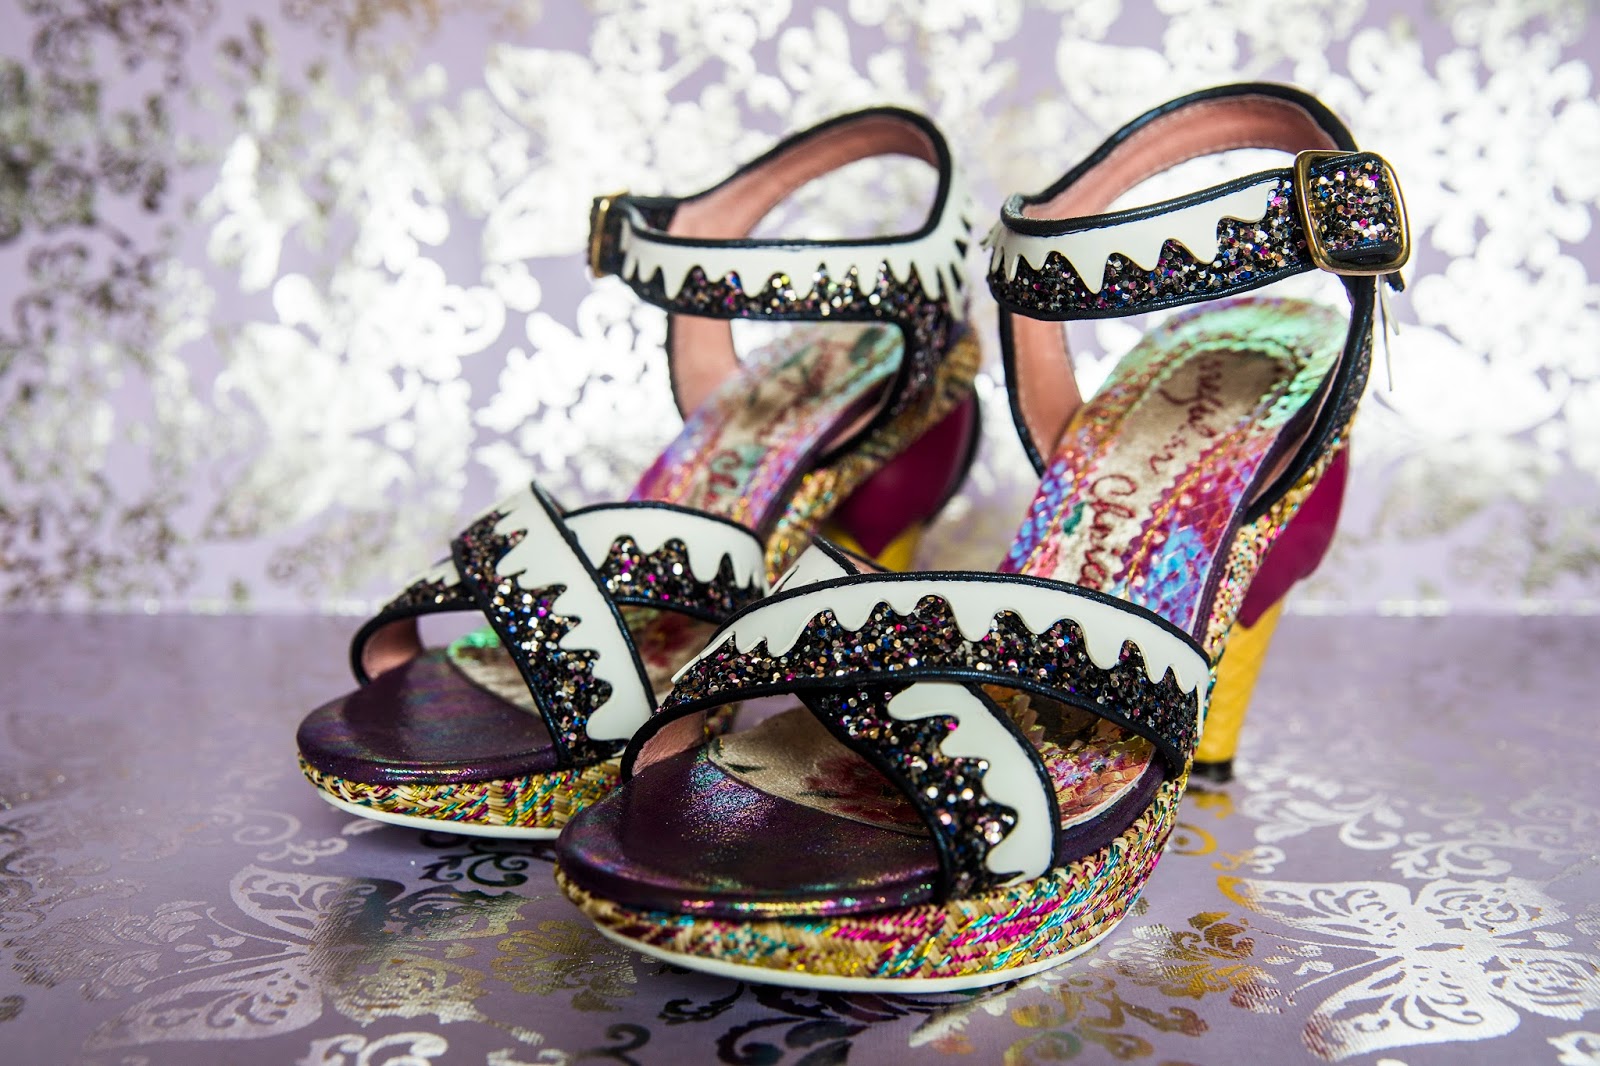 Cream high heels elegant shoes slightly pointed toe tip